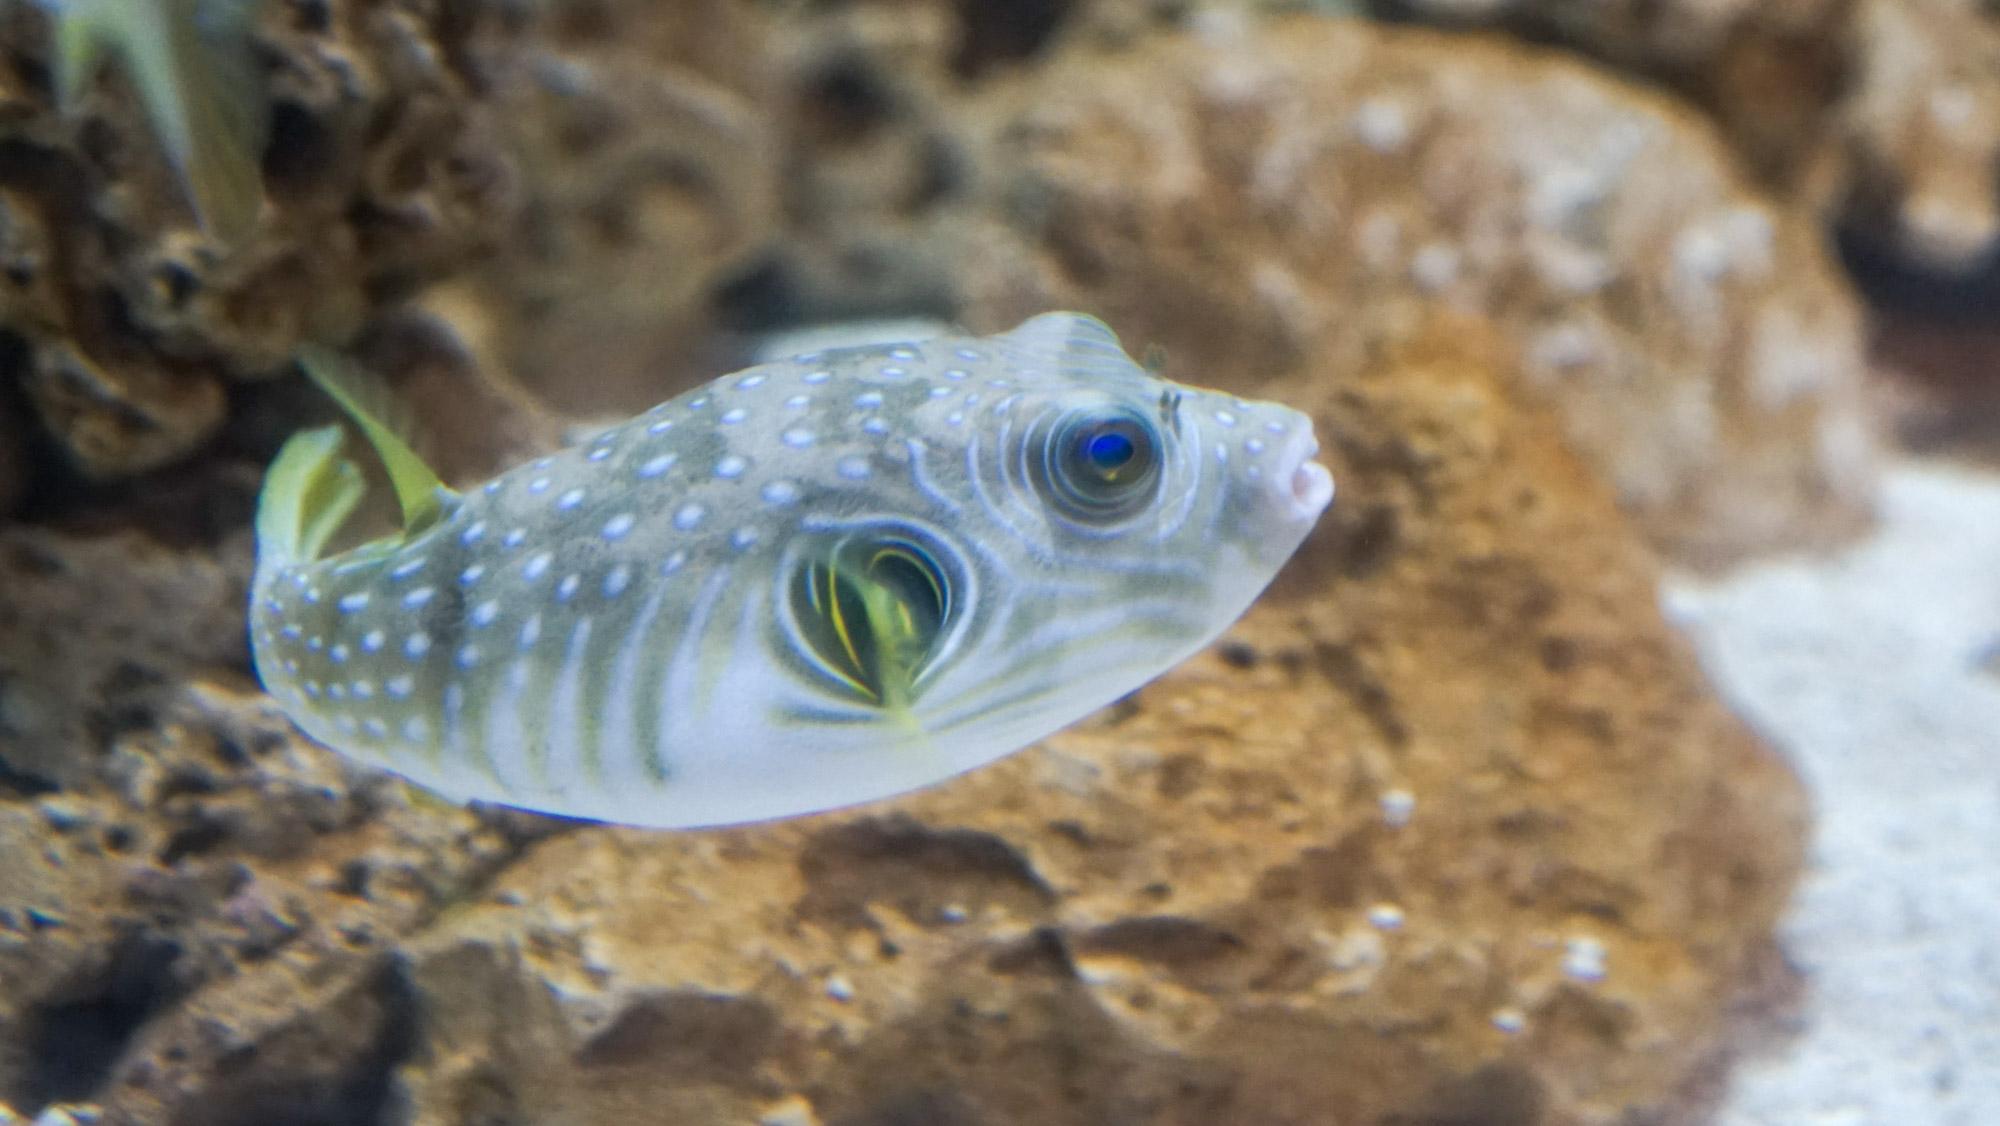 Chunky fish at blue reef aqaurium